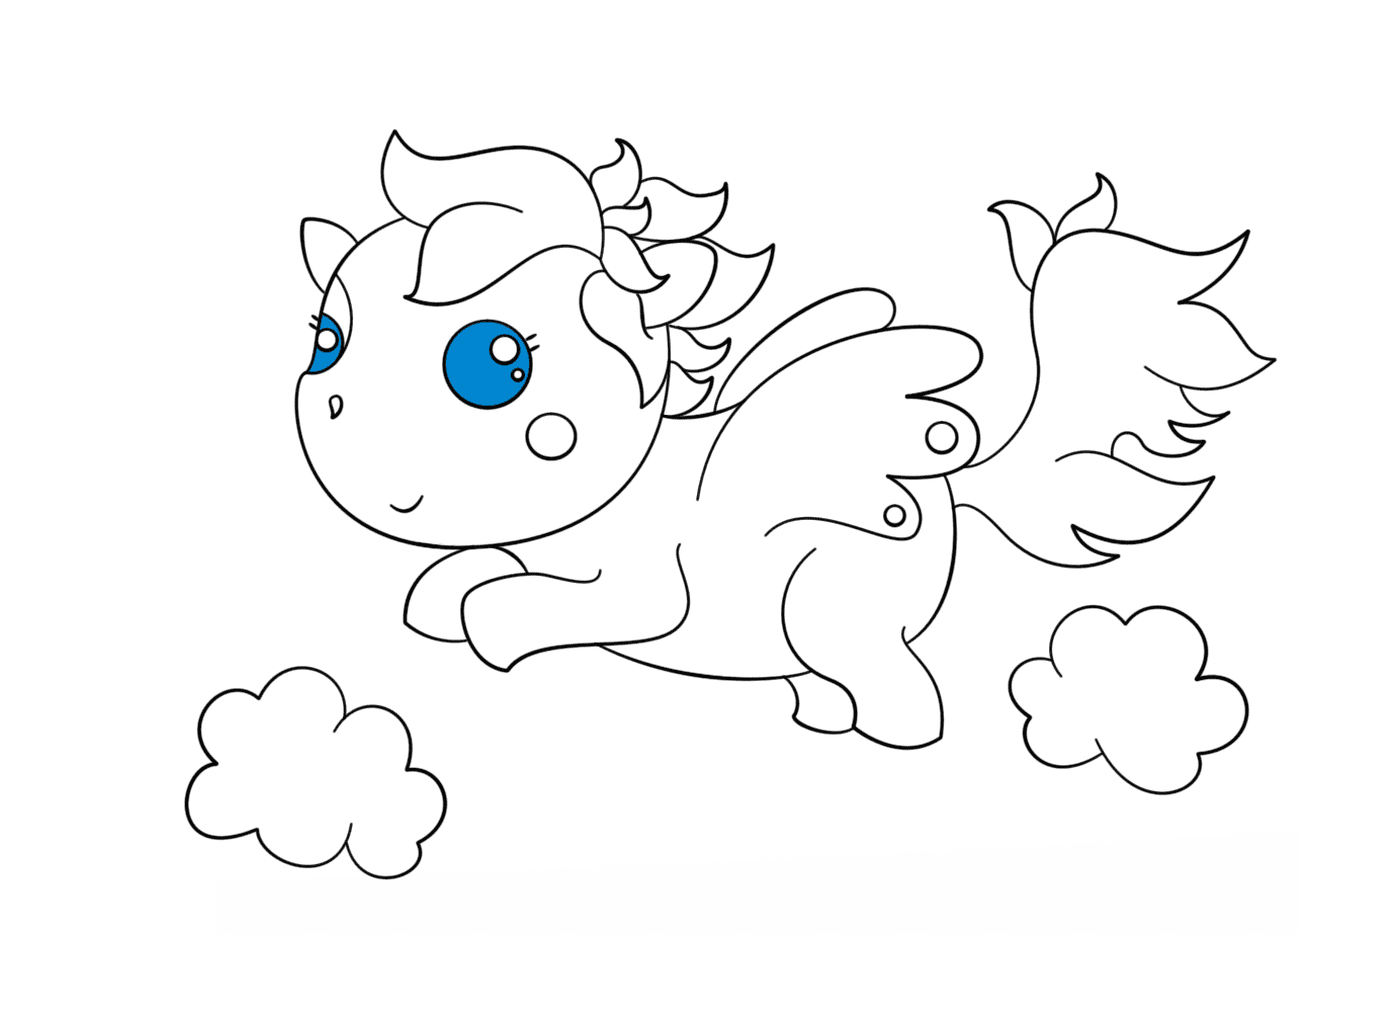  Pegasus chibi niedlich 